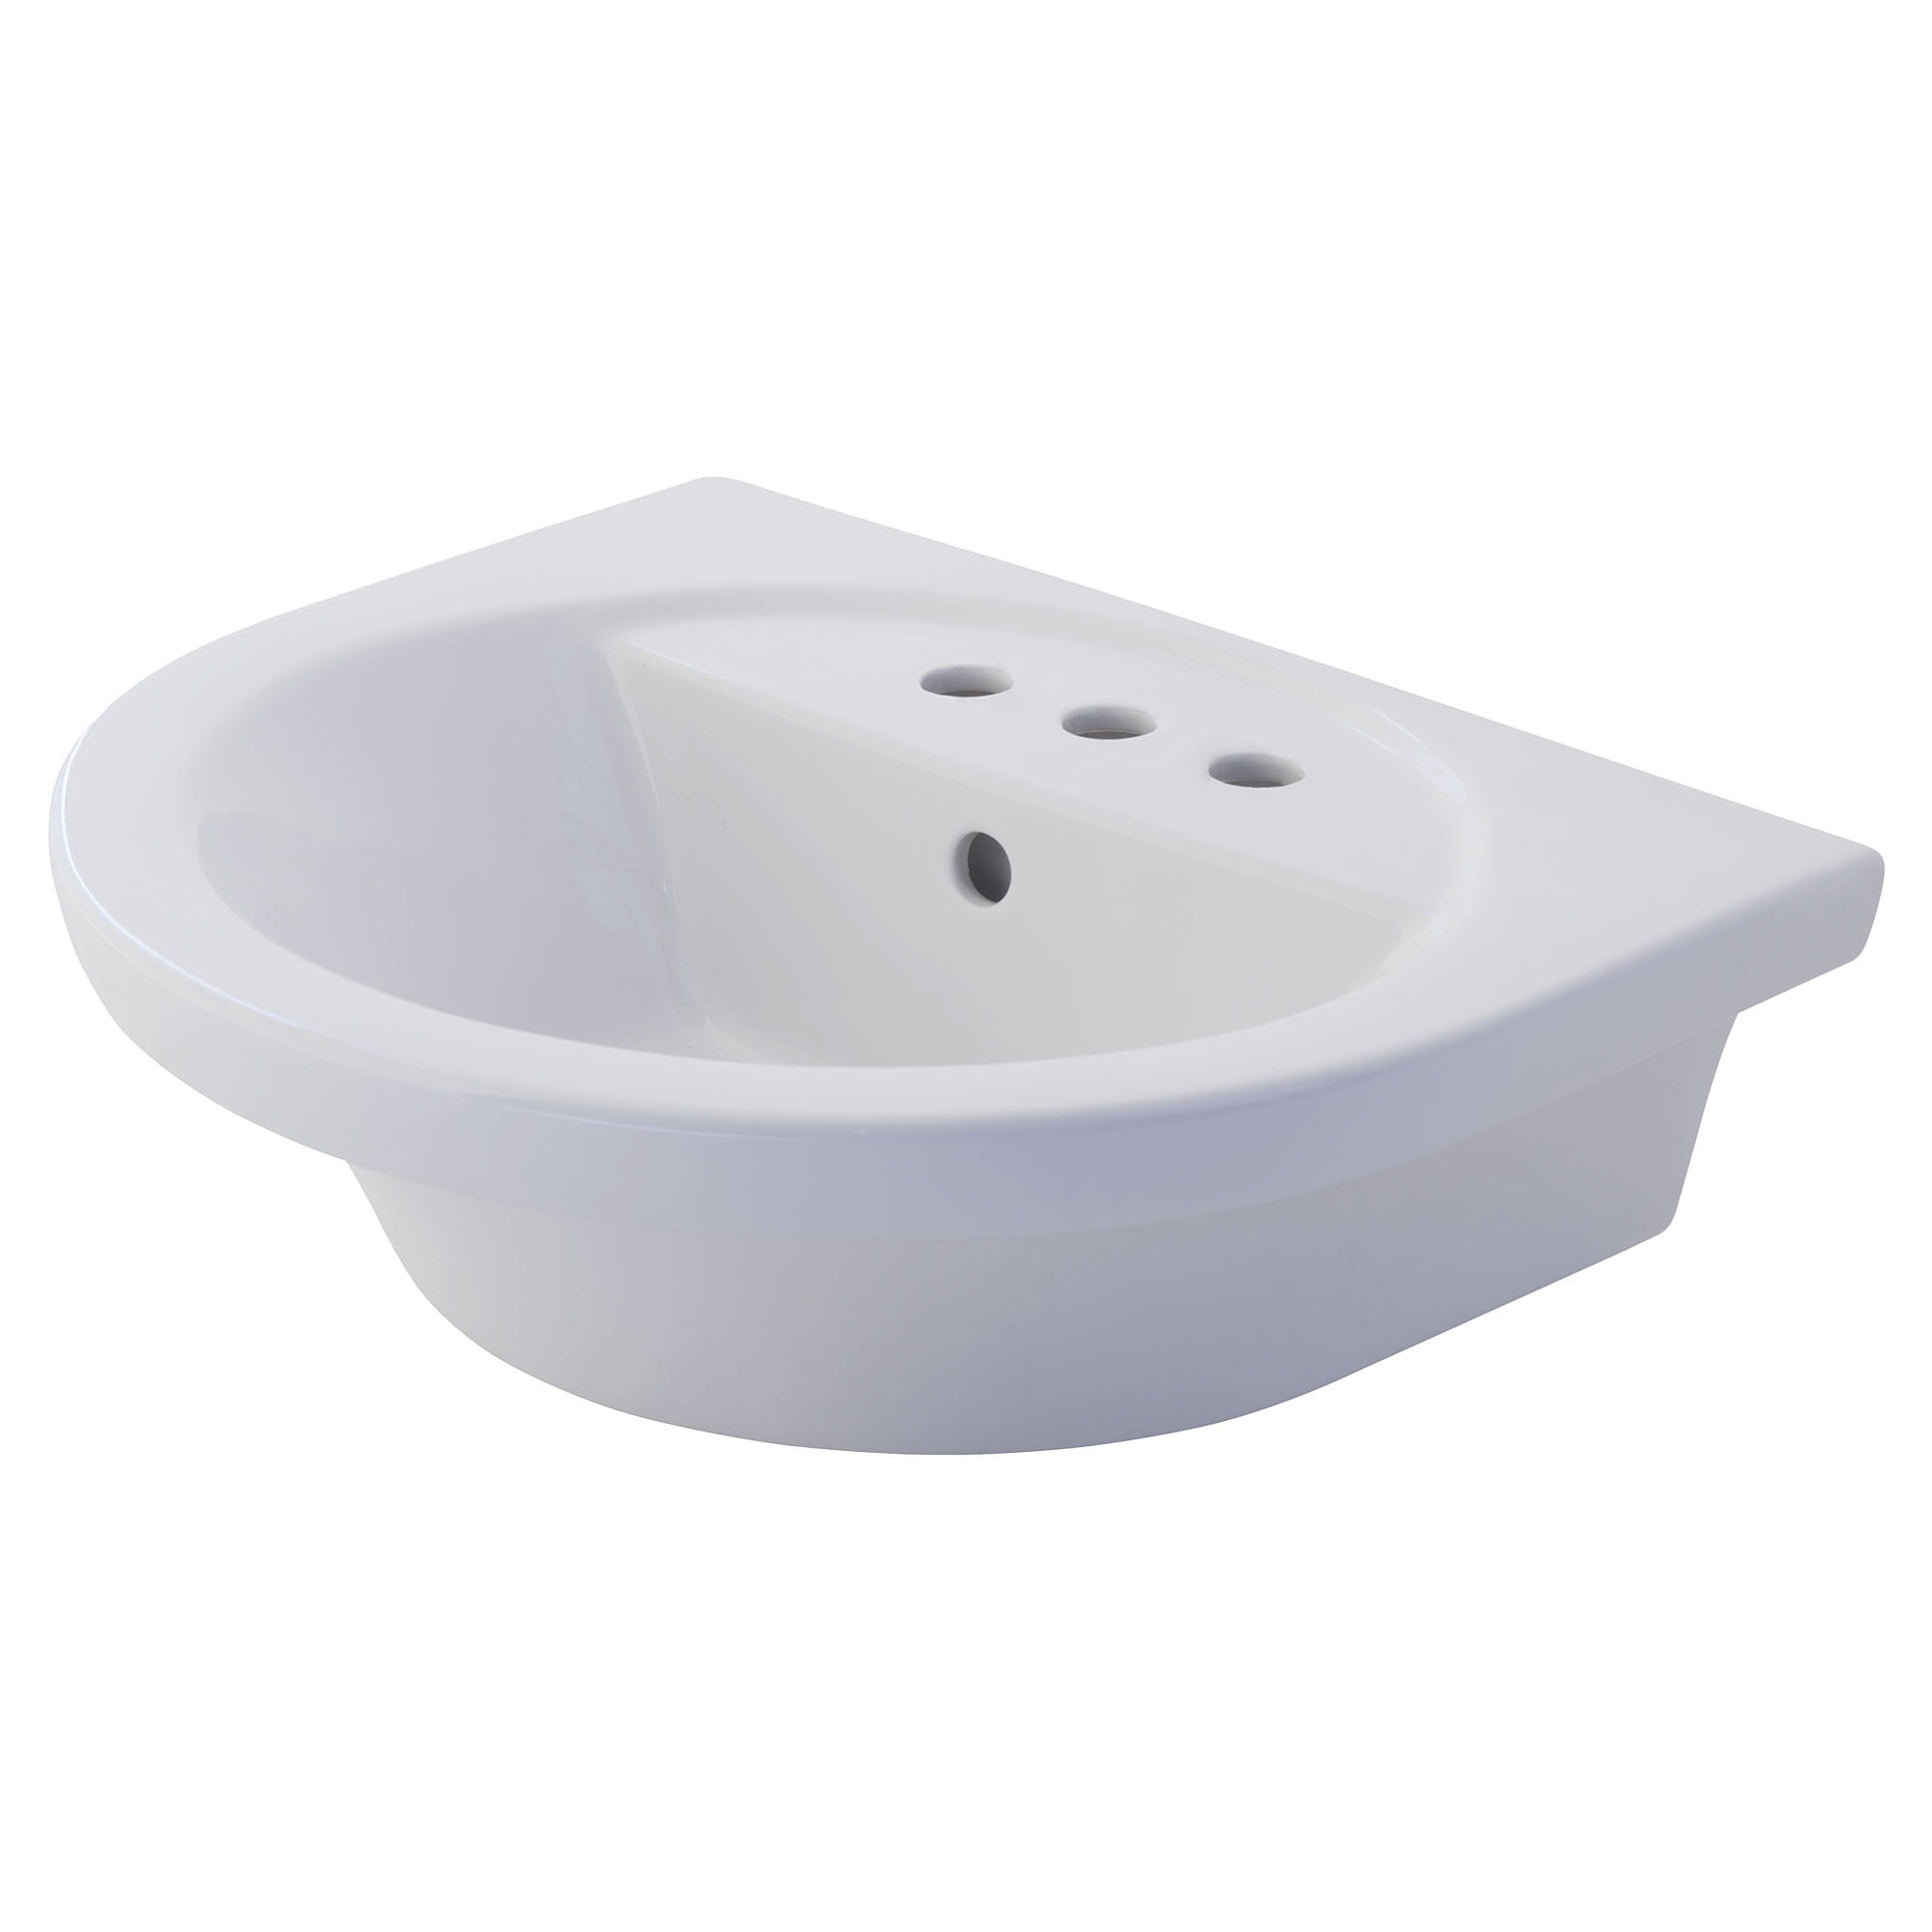 Tropic® Petite 8-Inch Widespread Pedestal Sink Top